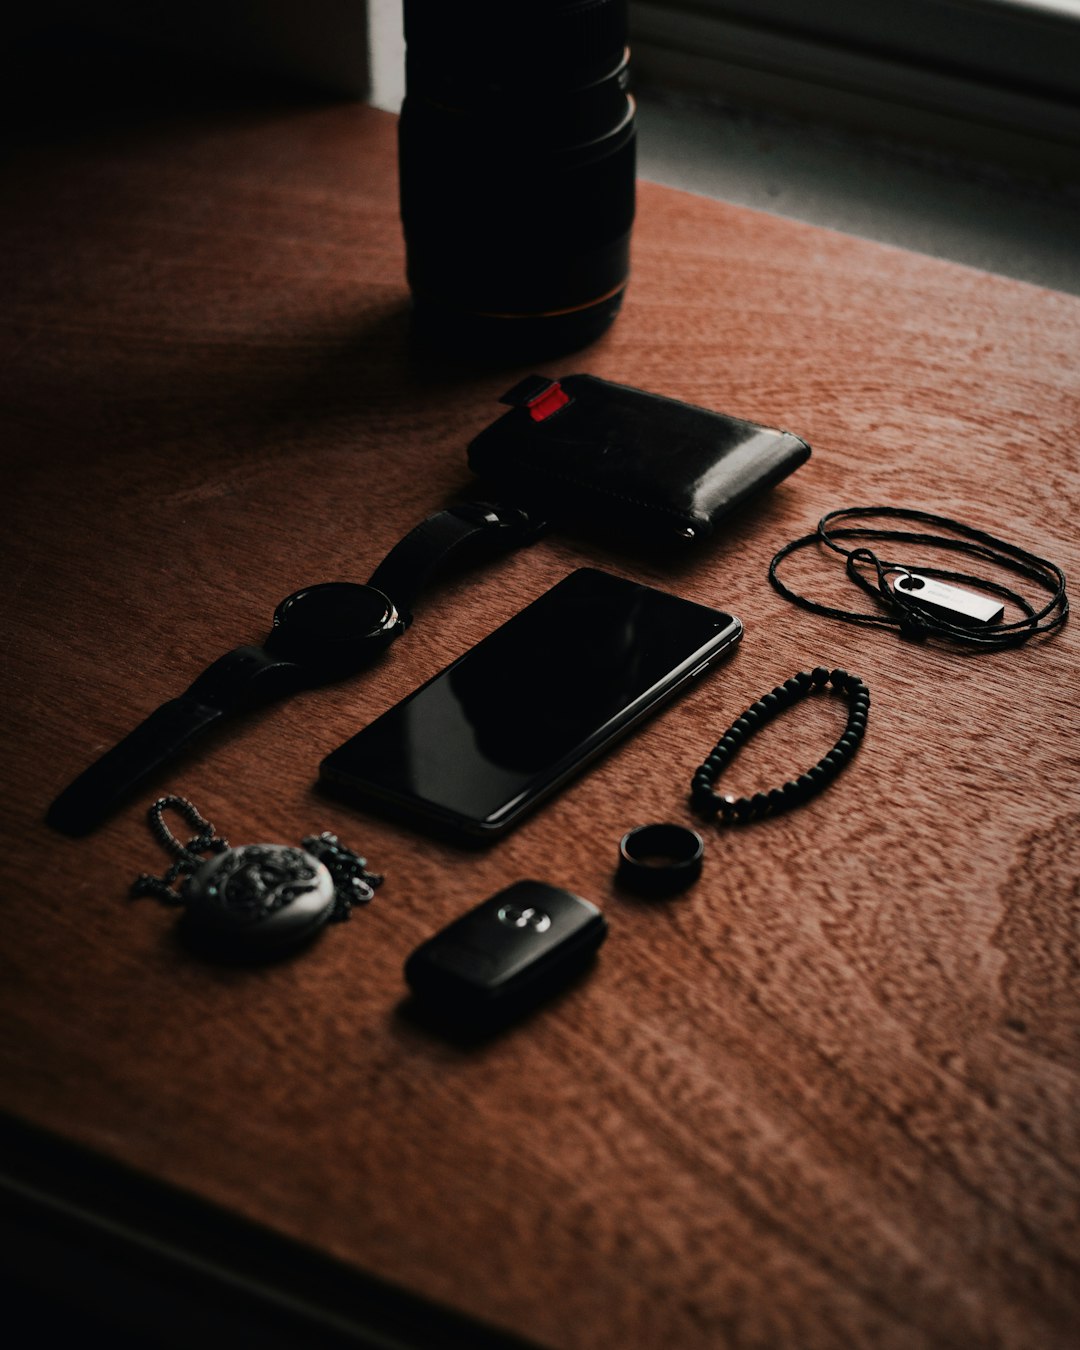 black iPhone 8 plus near black wristwatch, car fob, black leather wallet, and bracelet